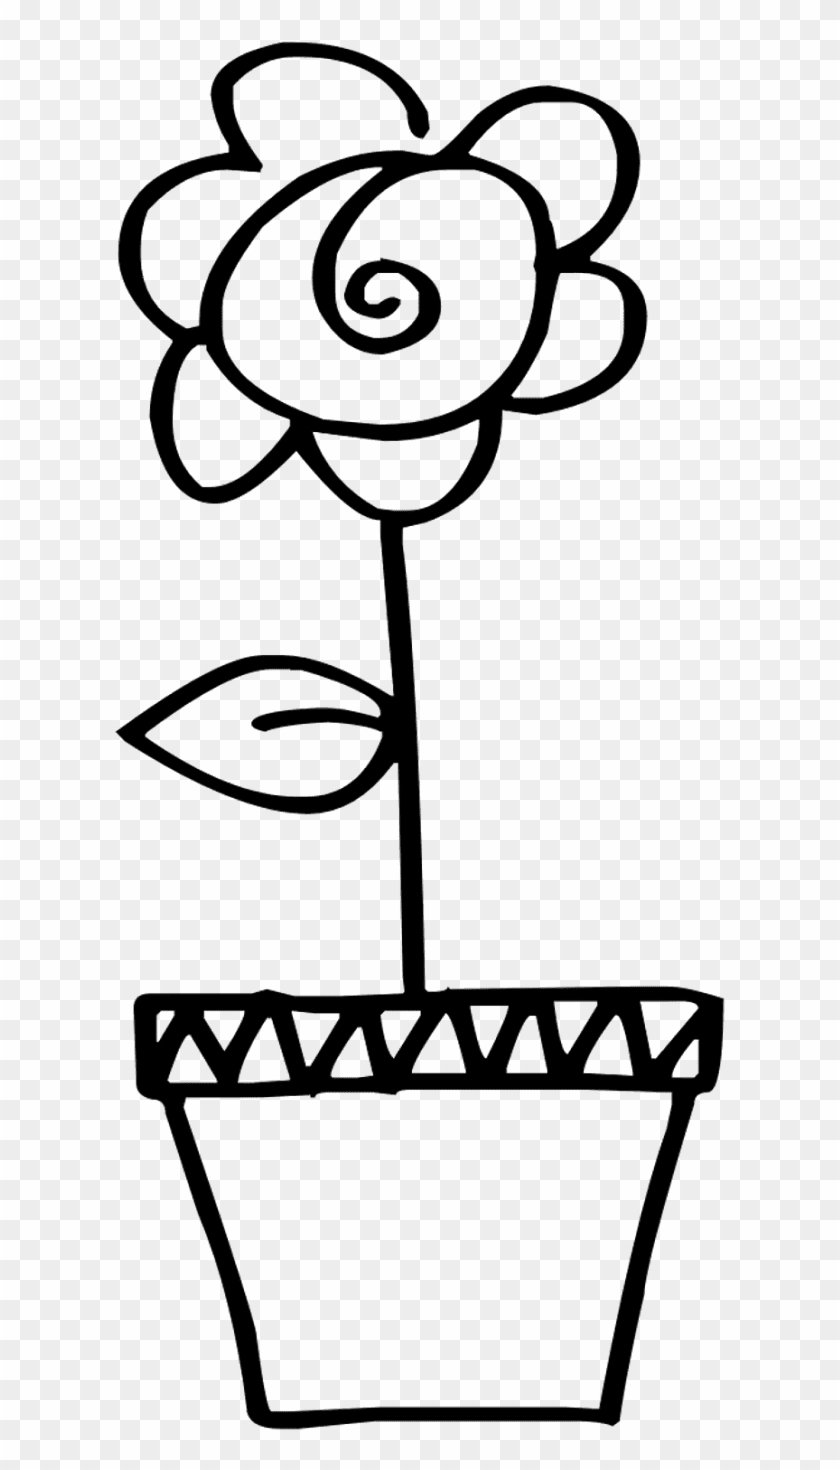 flower pot outline clip art